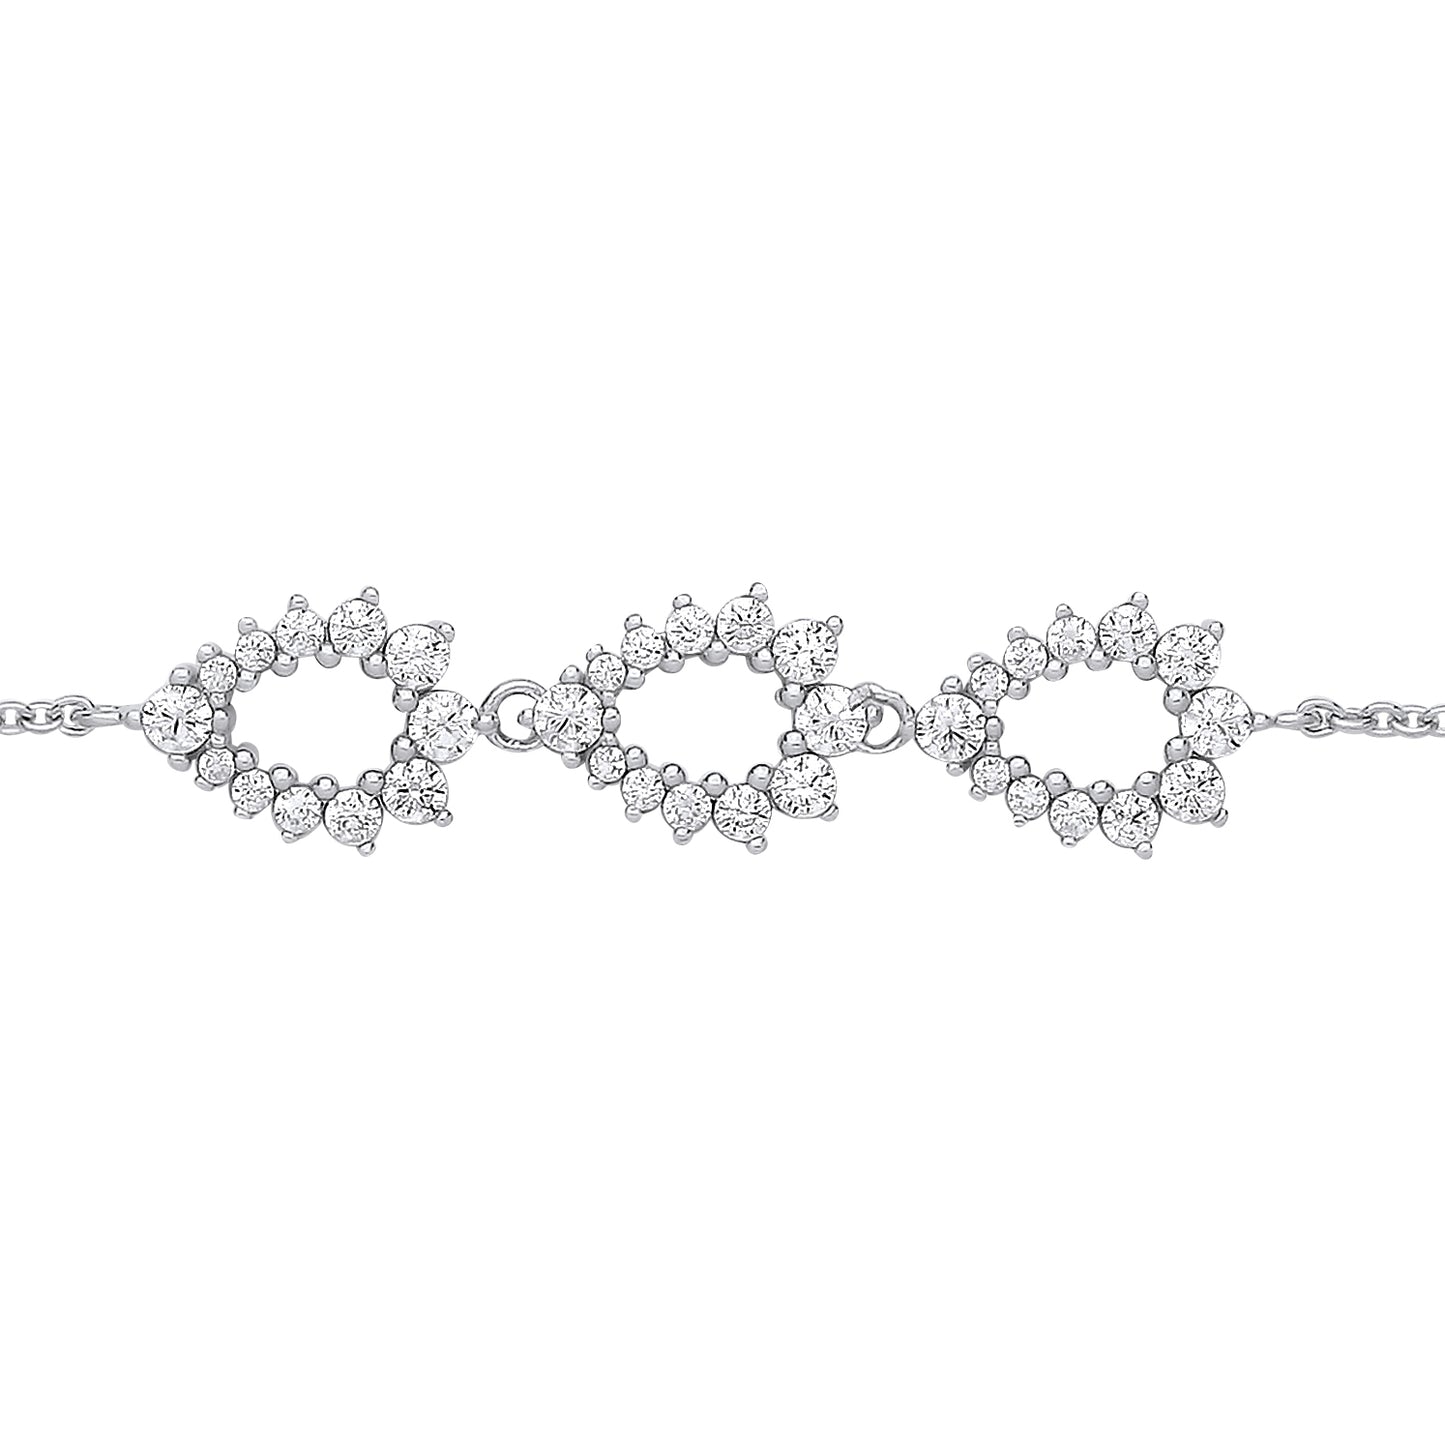 Silver  Triple Fizzy Avocado Cluster Rolo Charm Bracelet - GVB570